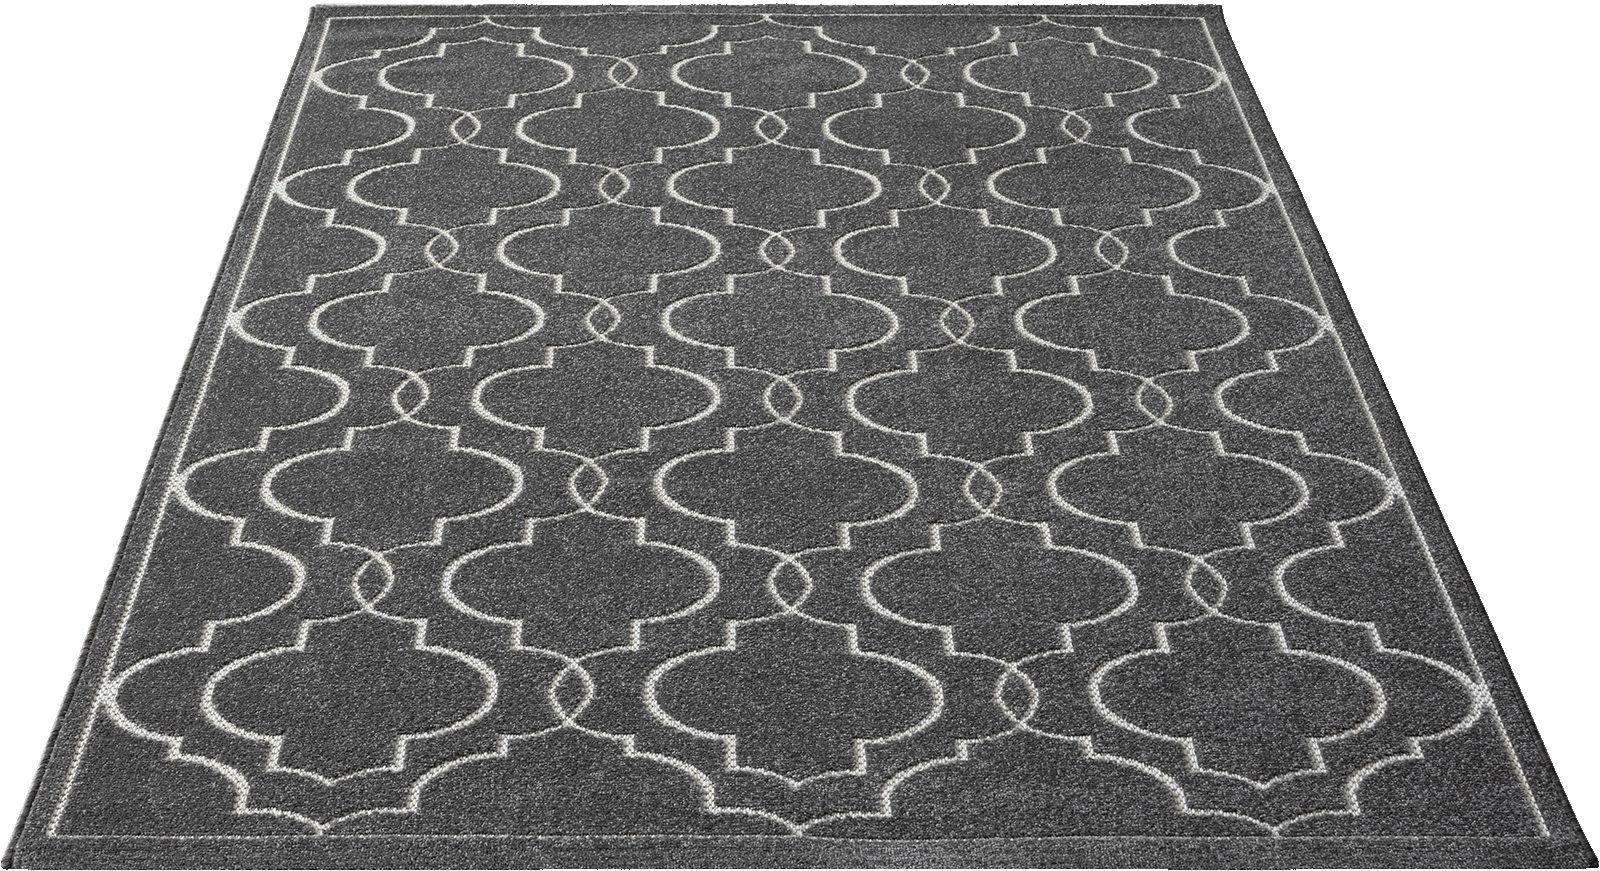 Rechteck Santo carpet, Teppich Plus Outdoor Teppich Anthrazit Teppich wetterfest, the